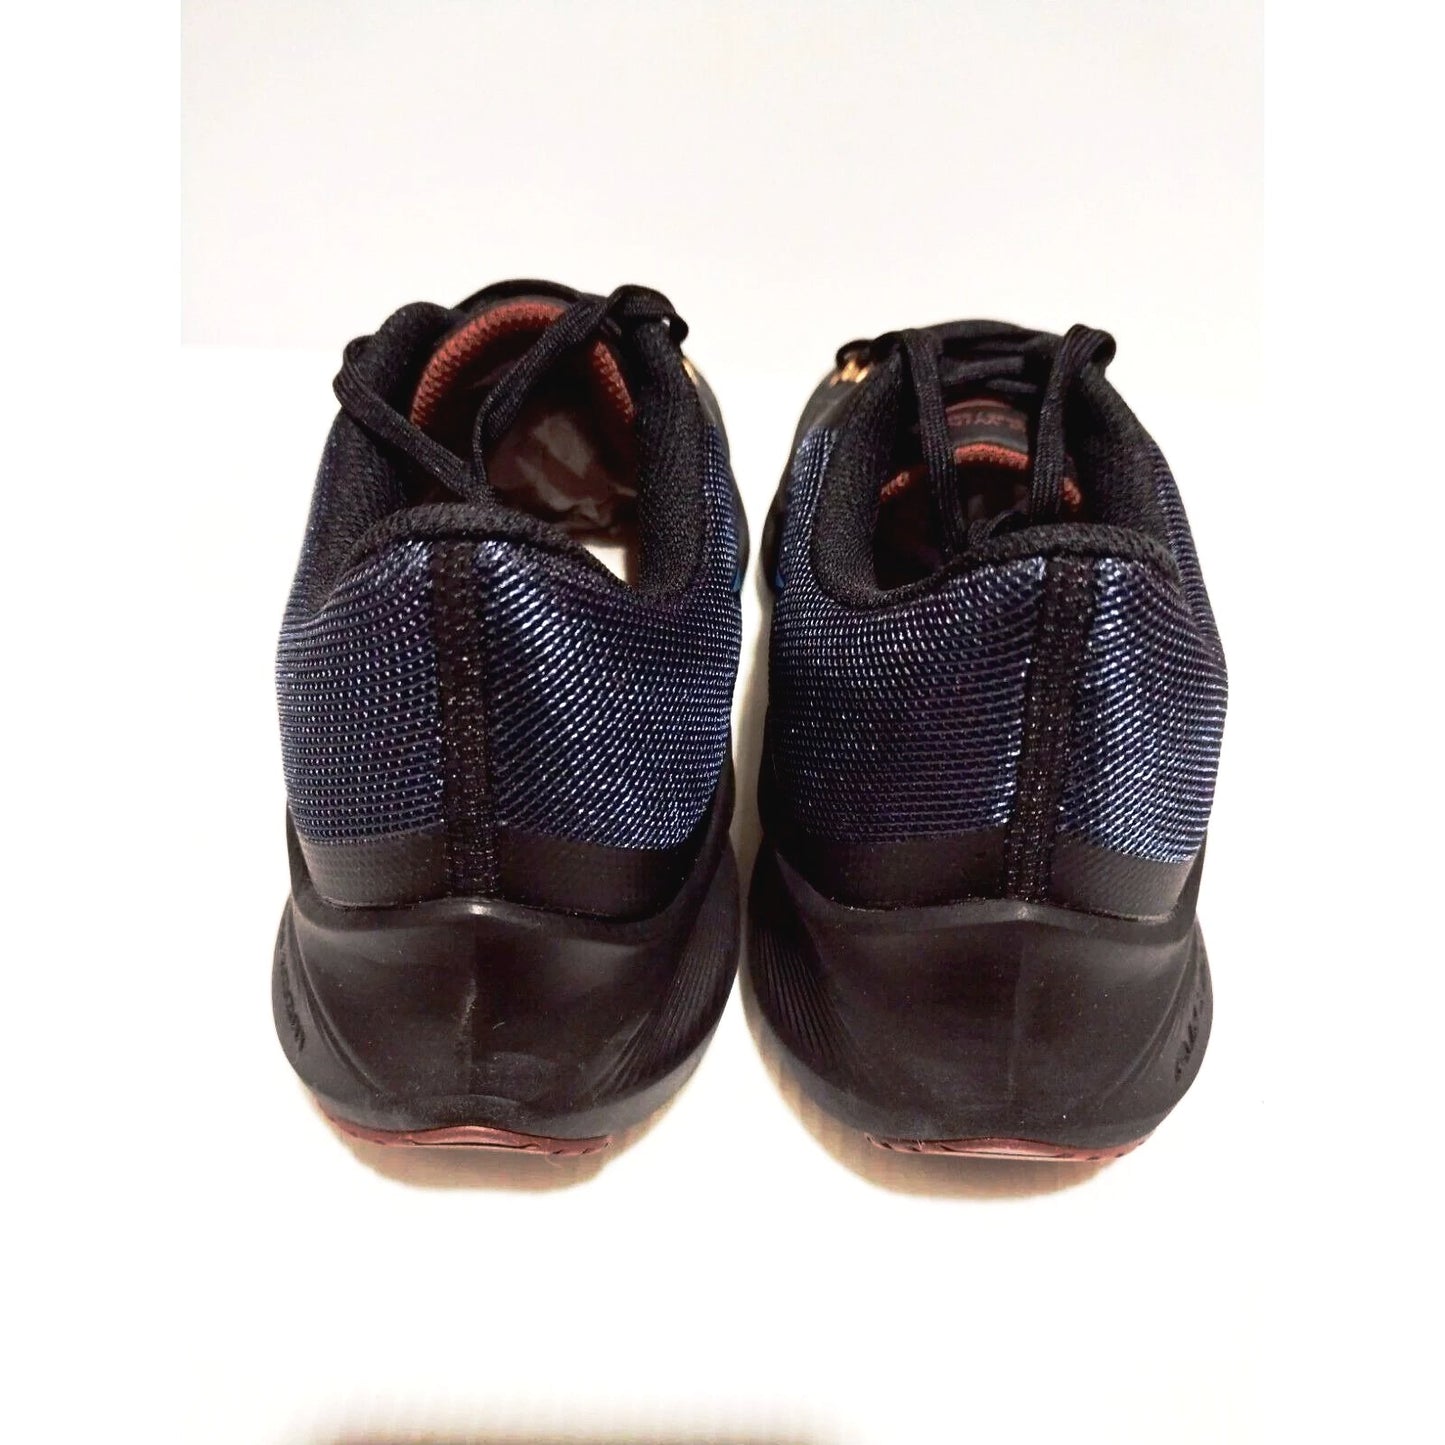 Nike zoom winflo 8 black photo blue running shoes size 9 us men